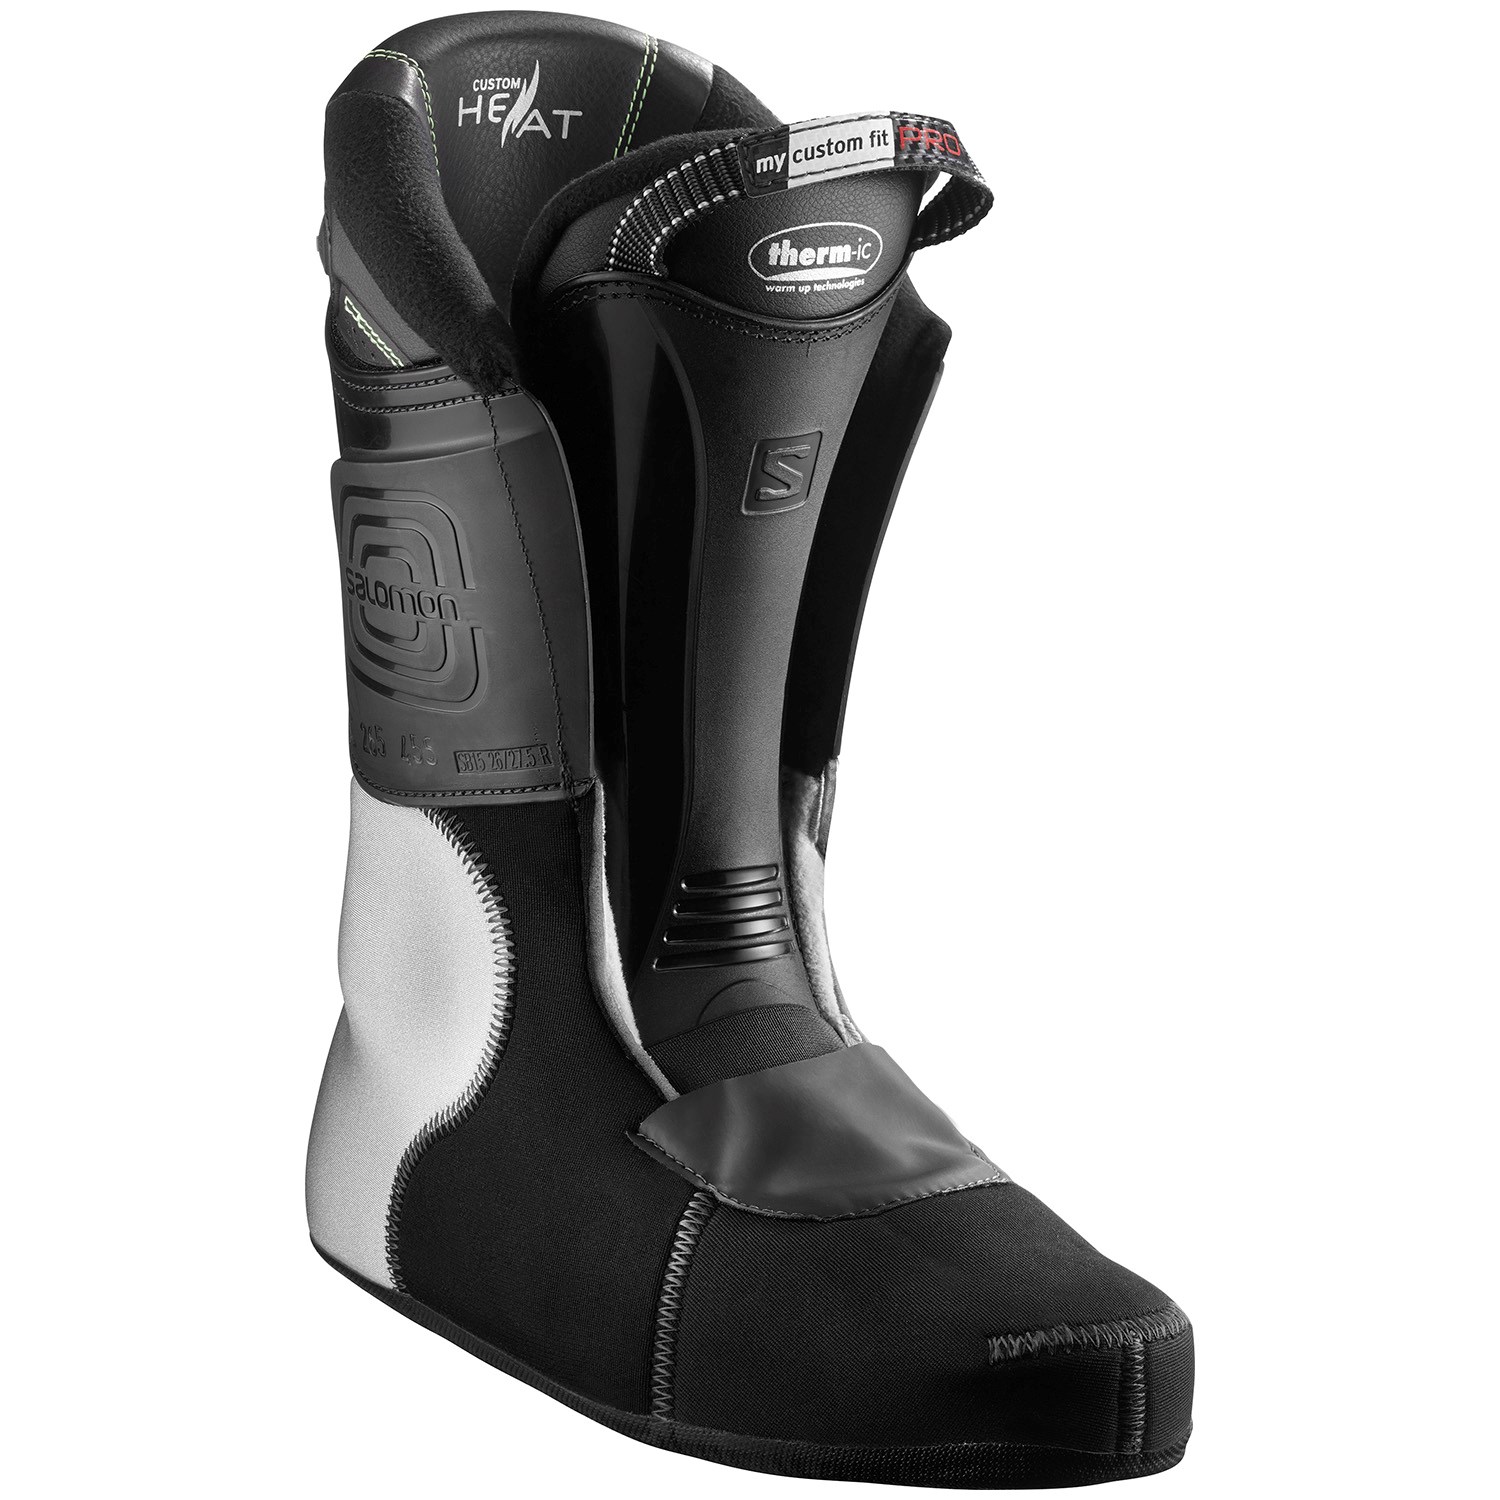 Mudret riffel Besøg bedsteforældre Salomon X Pro Custom Heat Ski Boots 2018 | evo